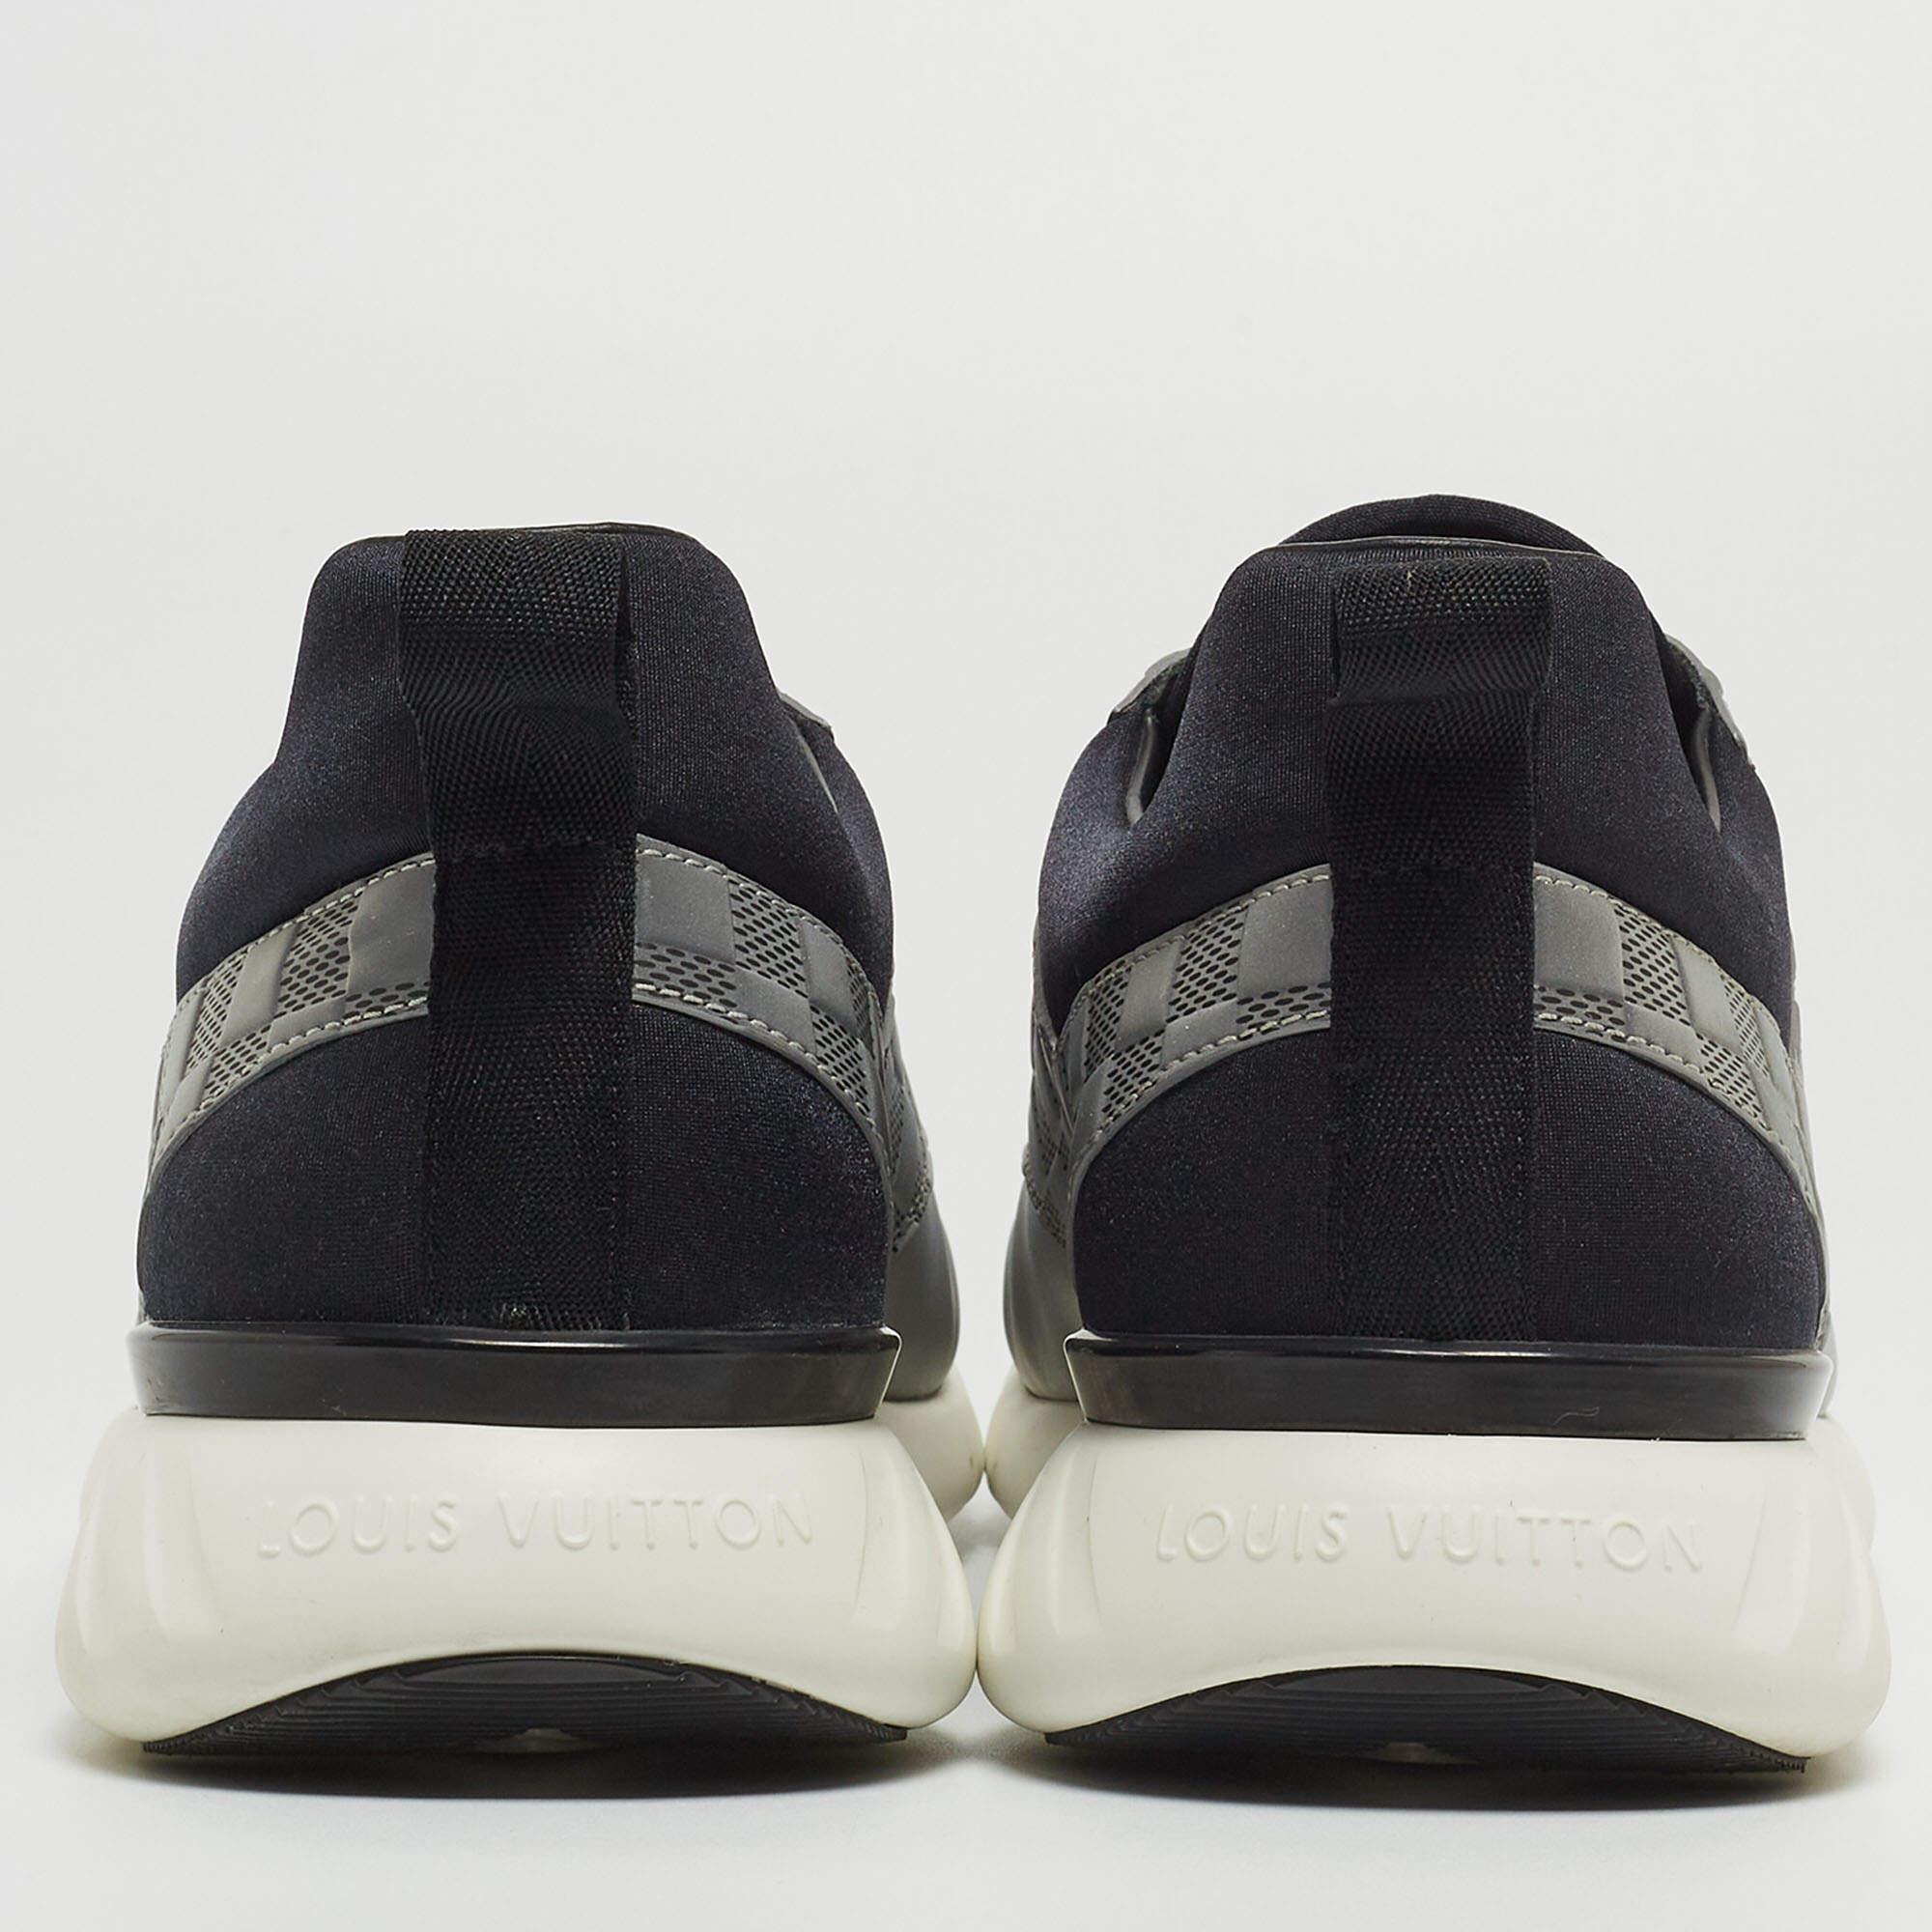 Louis Vuitton Grey/Black Fabric Fastlane Low Top Sneakers Size 39 3